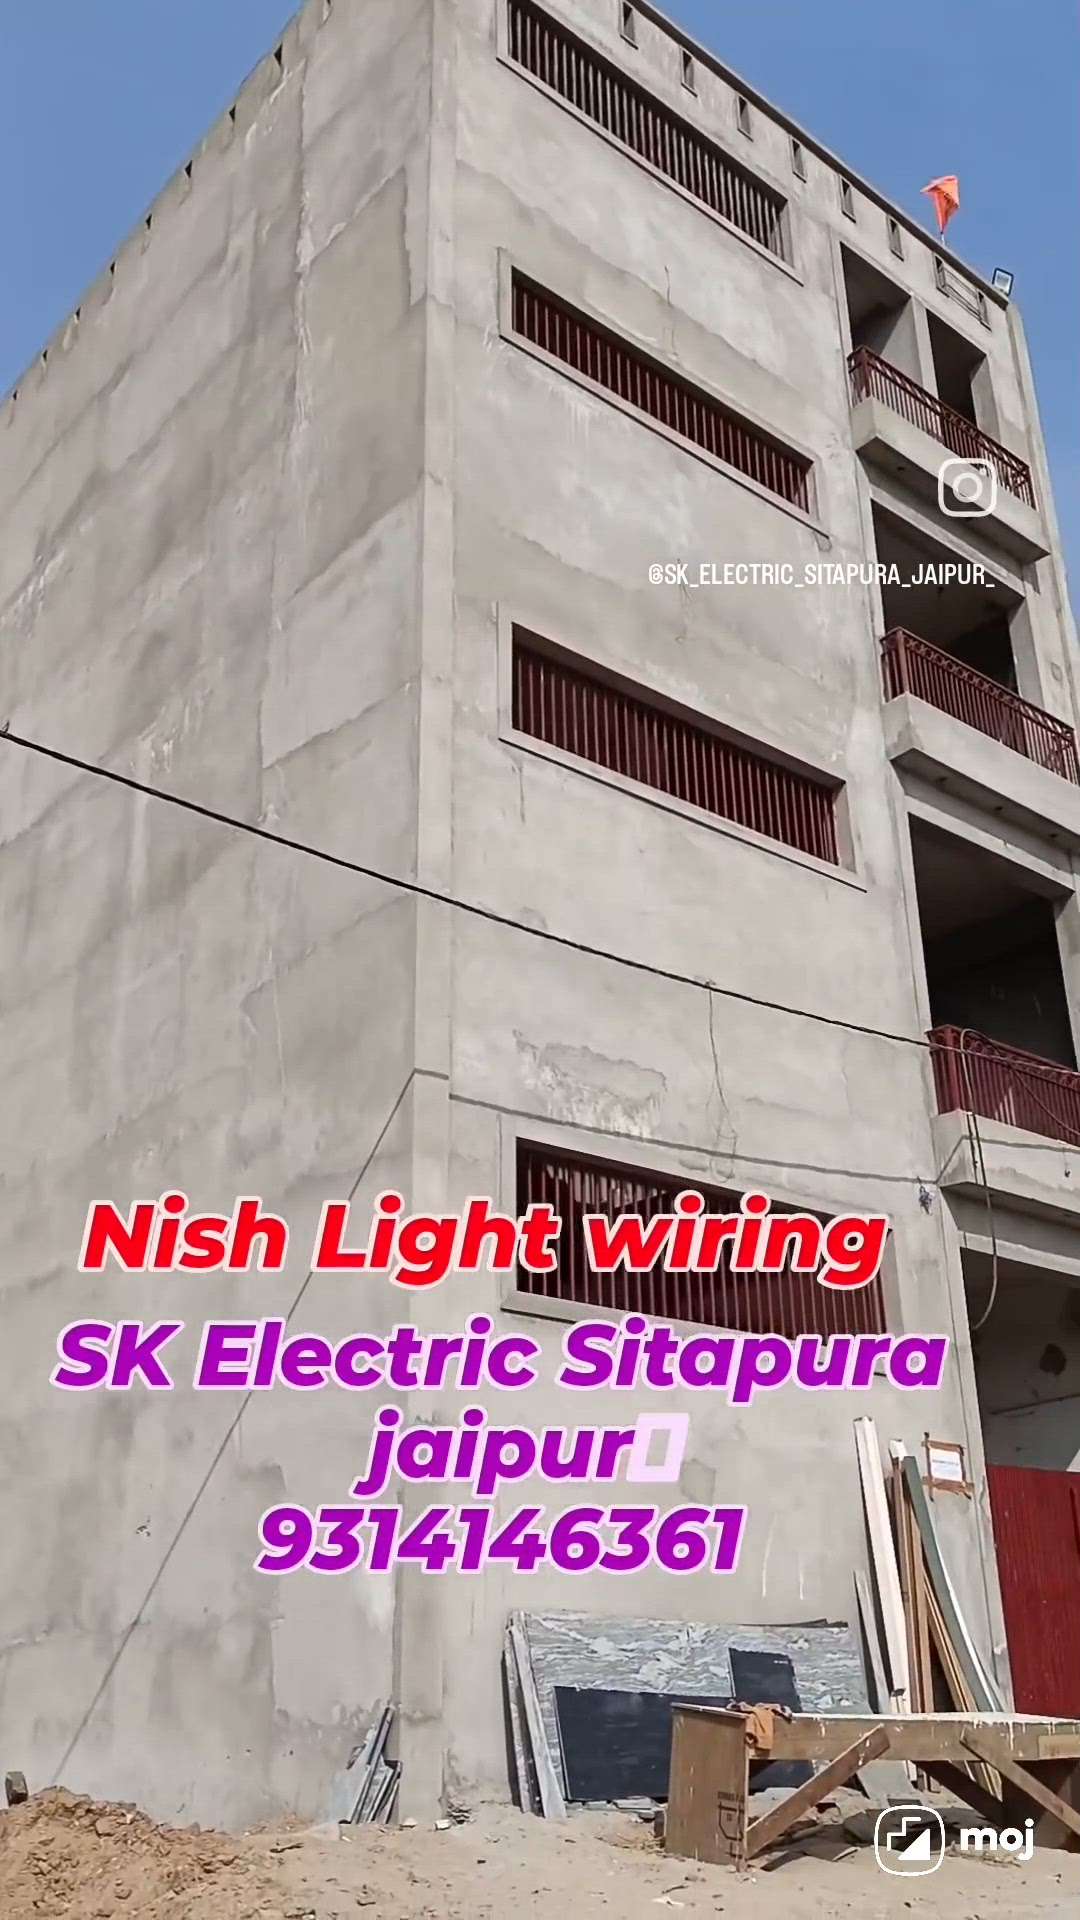 #sk  #electric  #sitapura  #jaipur
9314146361